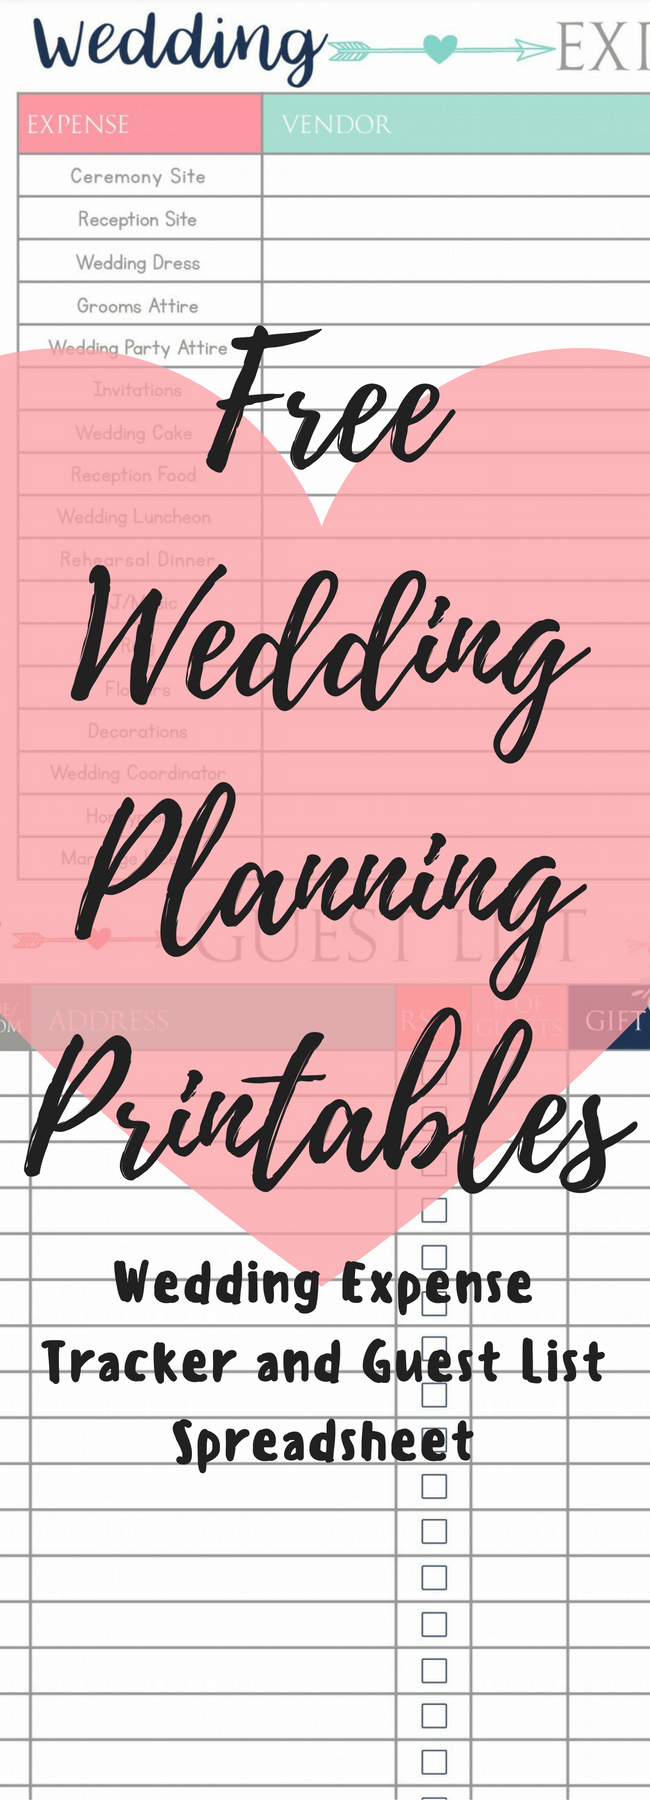 FREE Wedding Planning Printables! - Clarks Condensed -   19 wedding Planning printables ideas